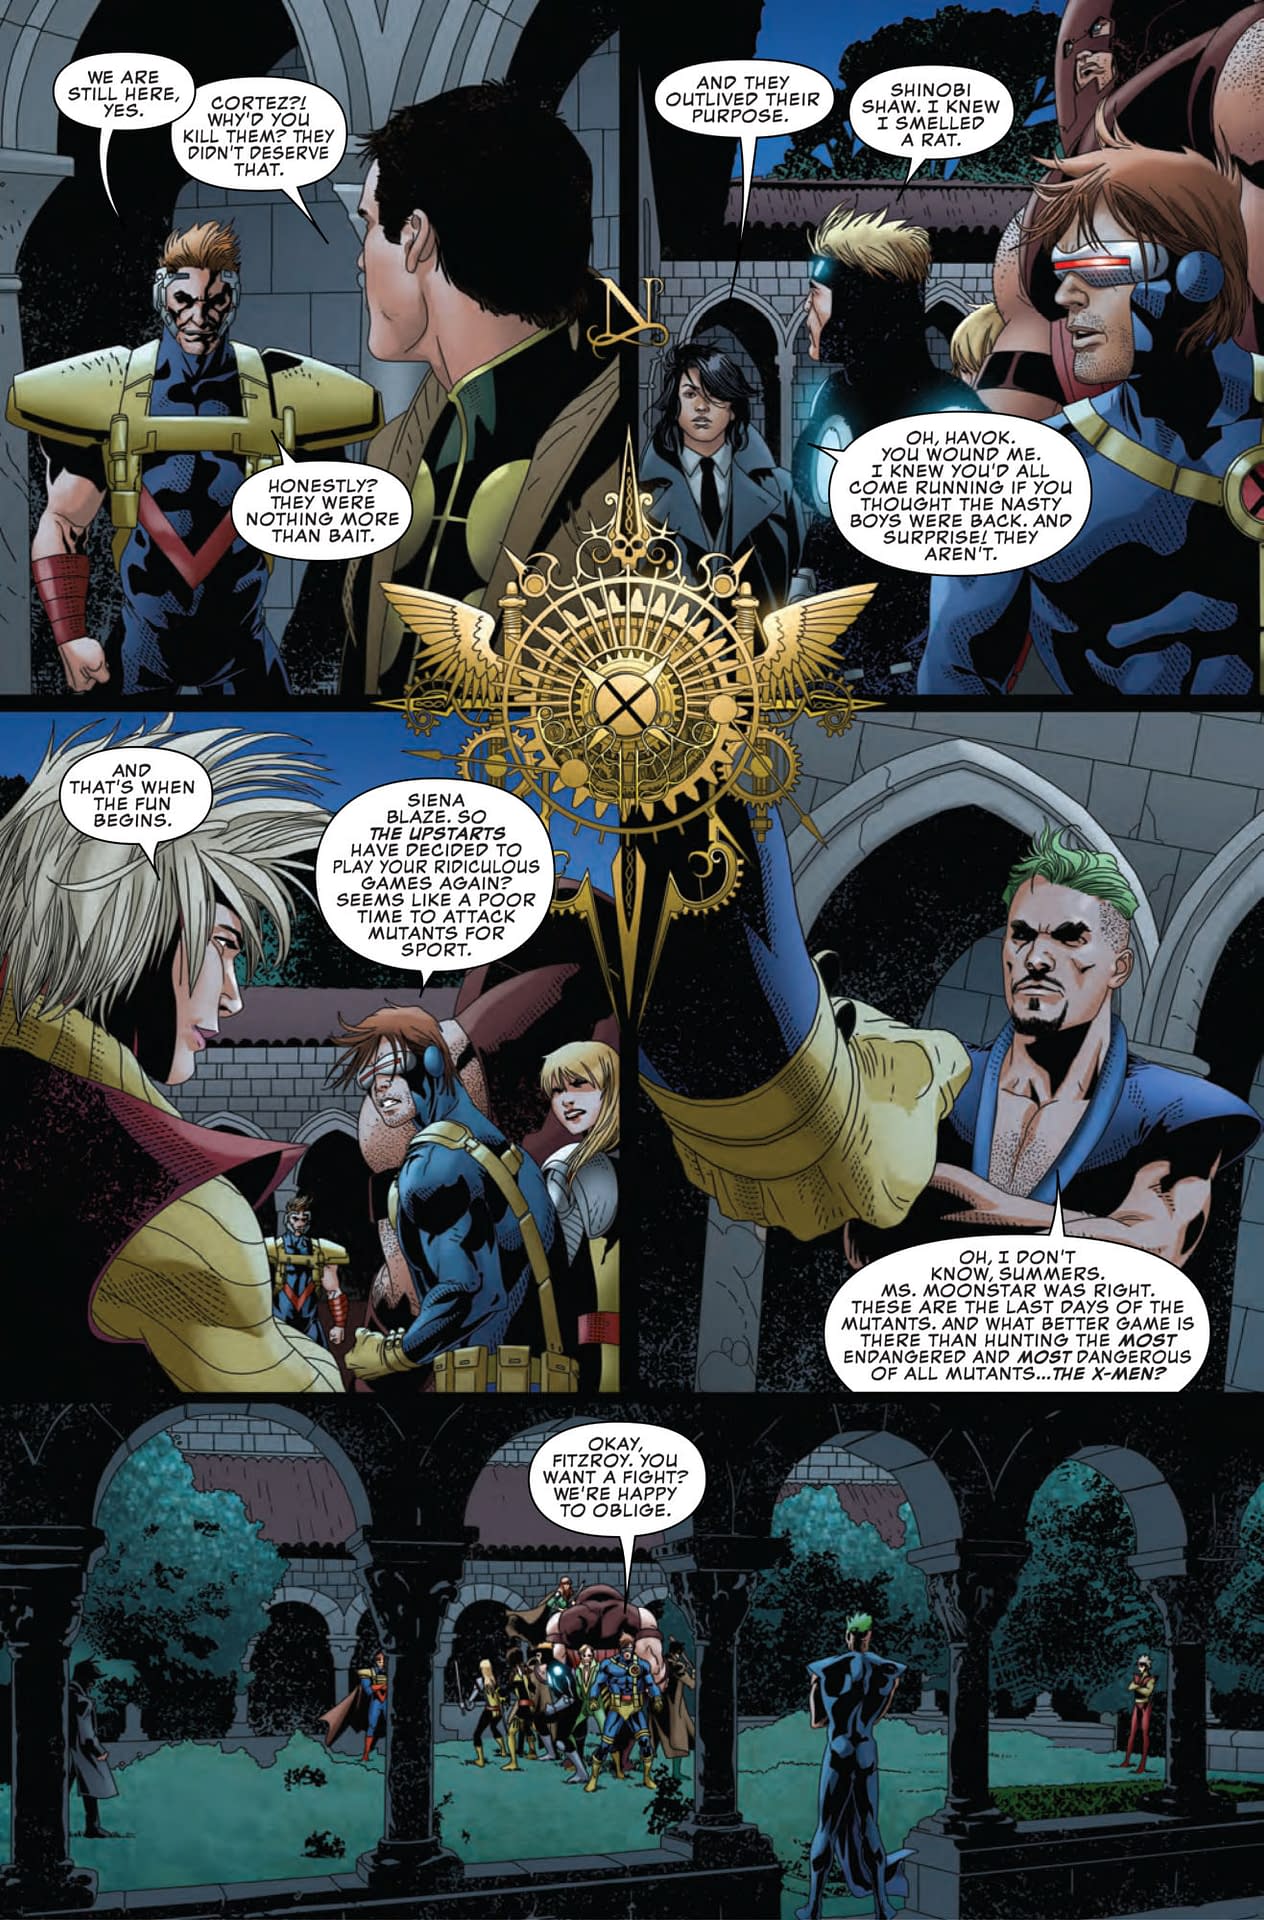 Uncanny X-Men #20 in Uncanny X-Men #20